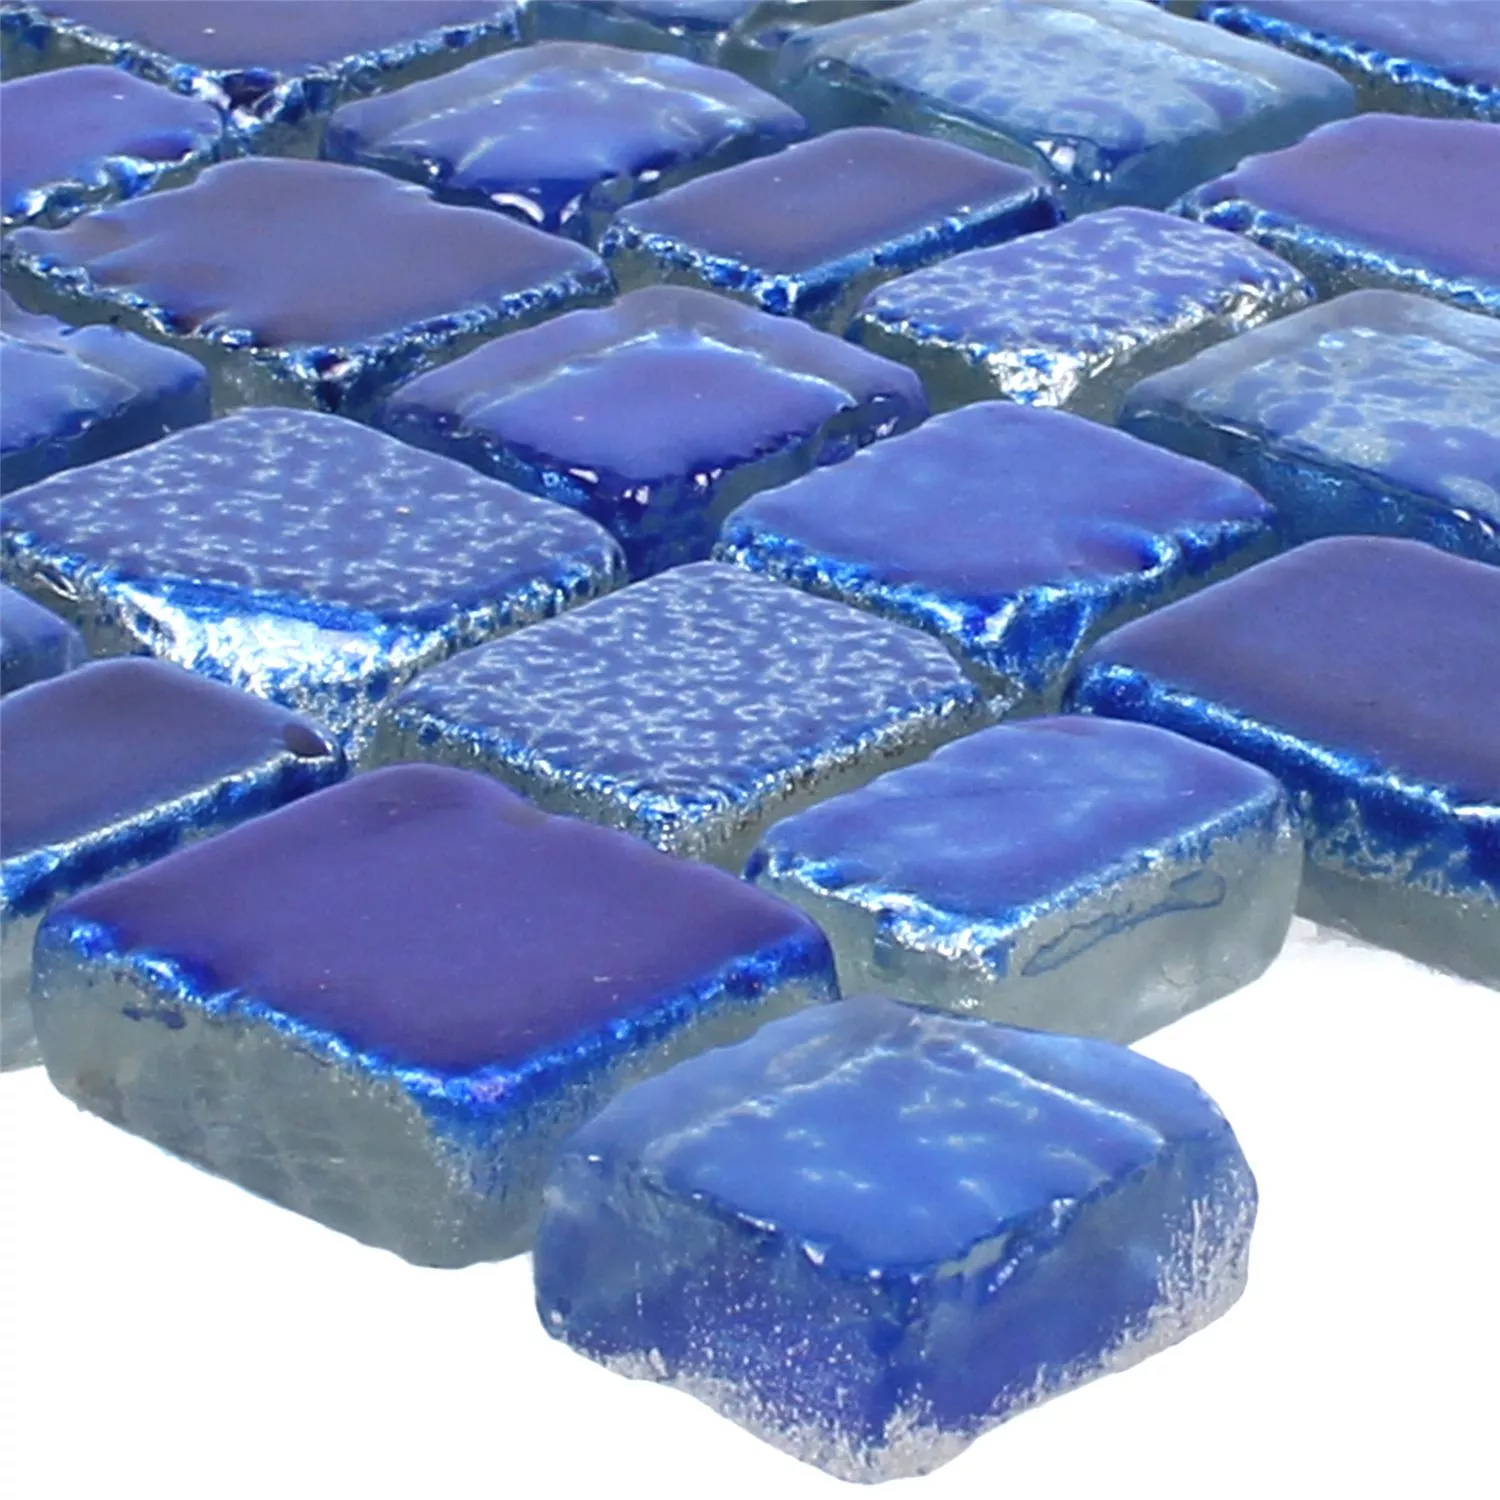 Mosaic Tiles Glass Roxy Blue